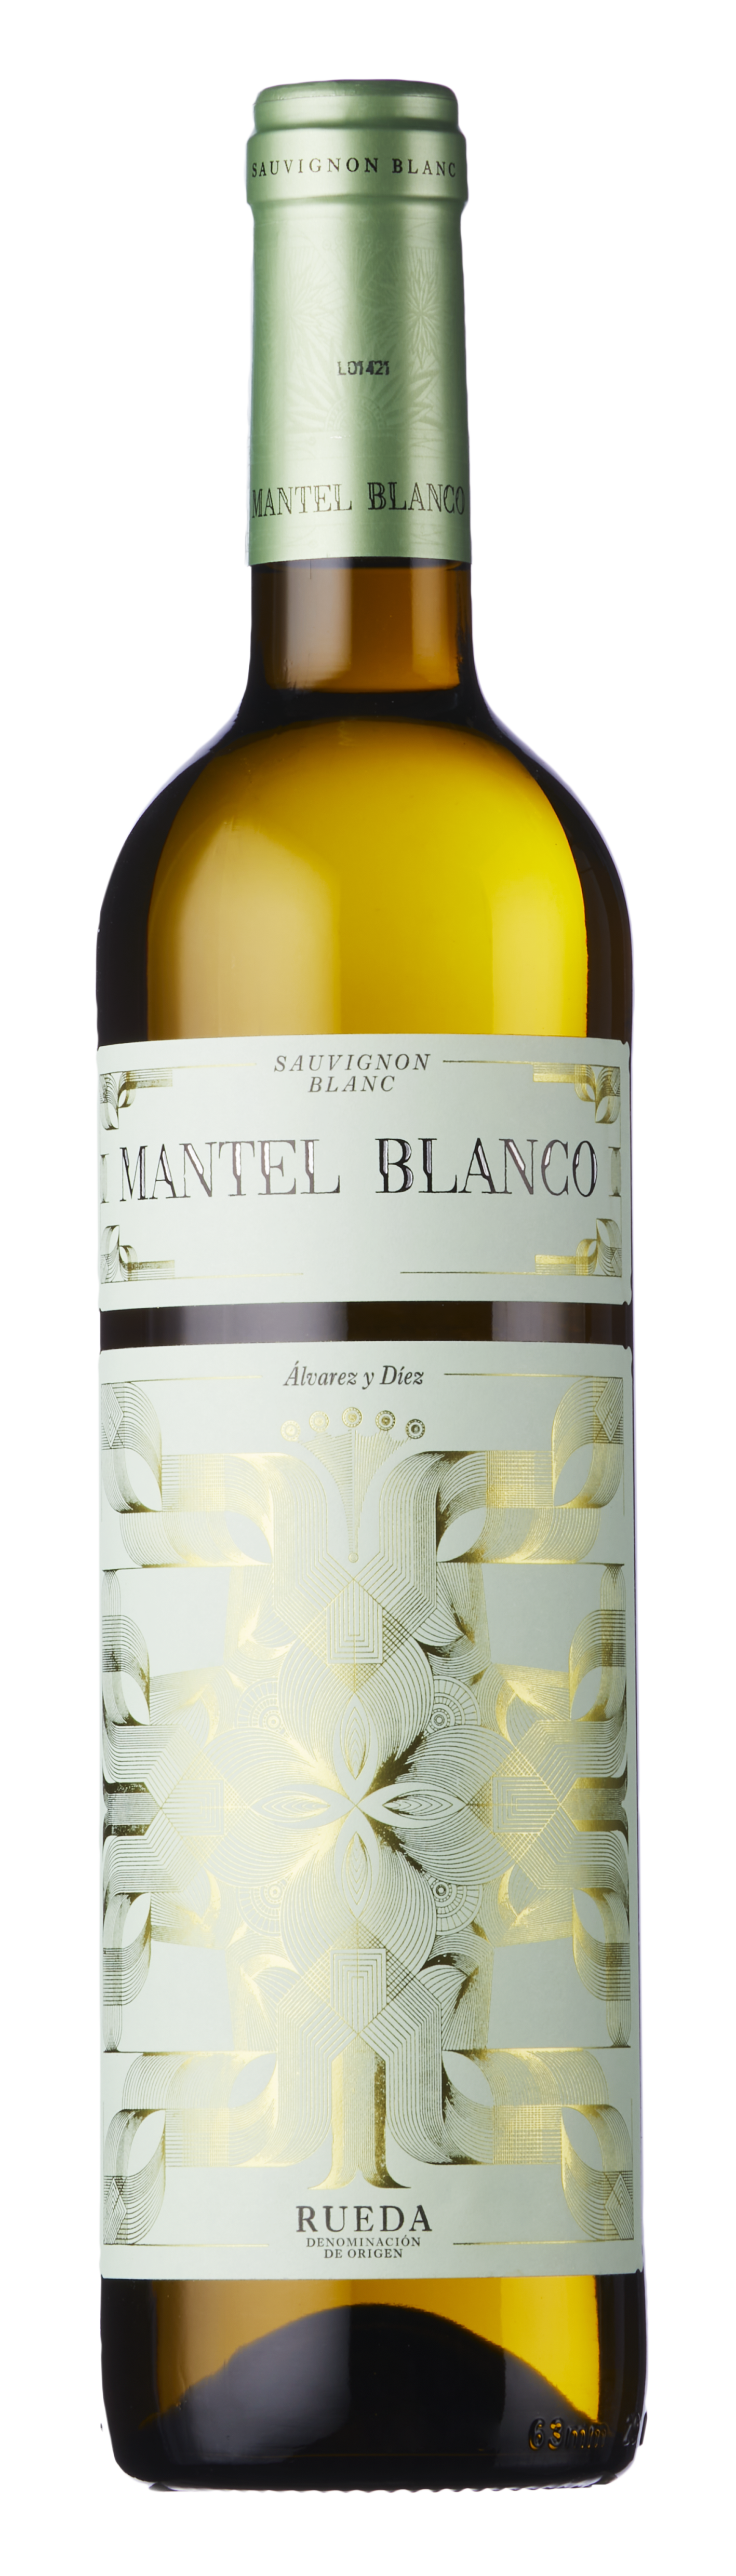 Bottle shot - Alvarez y Diez, Mantel Blanco, Sauvignon Blanc, DO Rueda, Spain